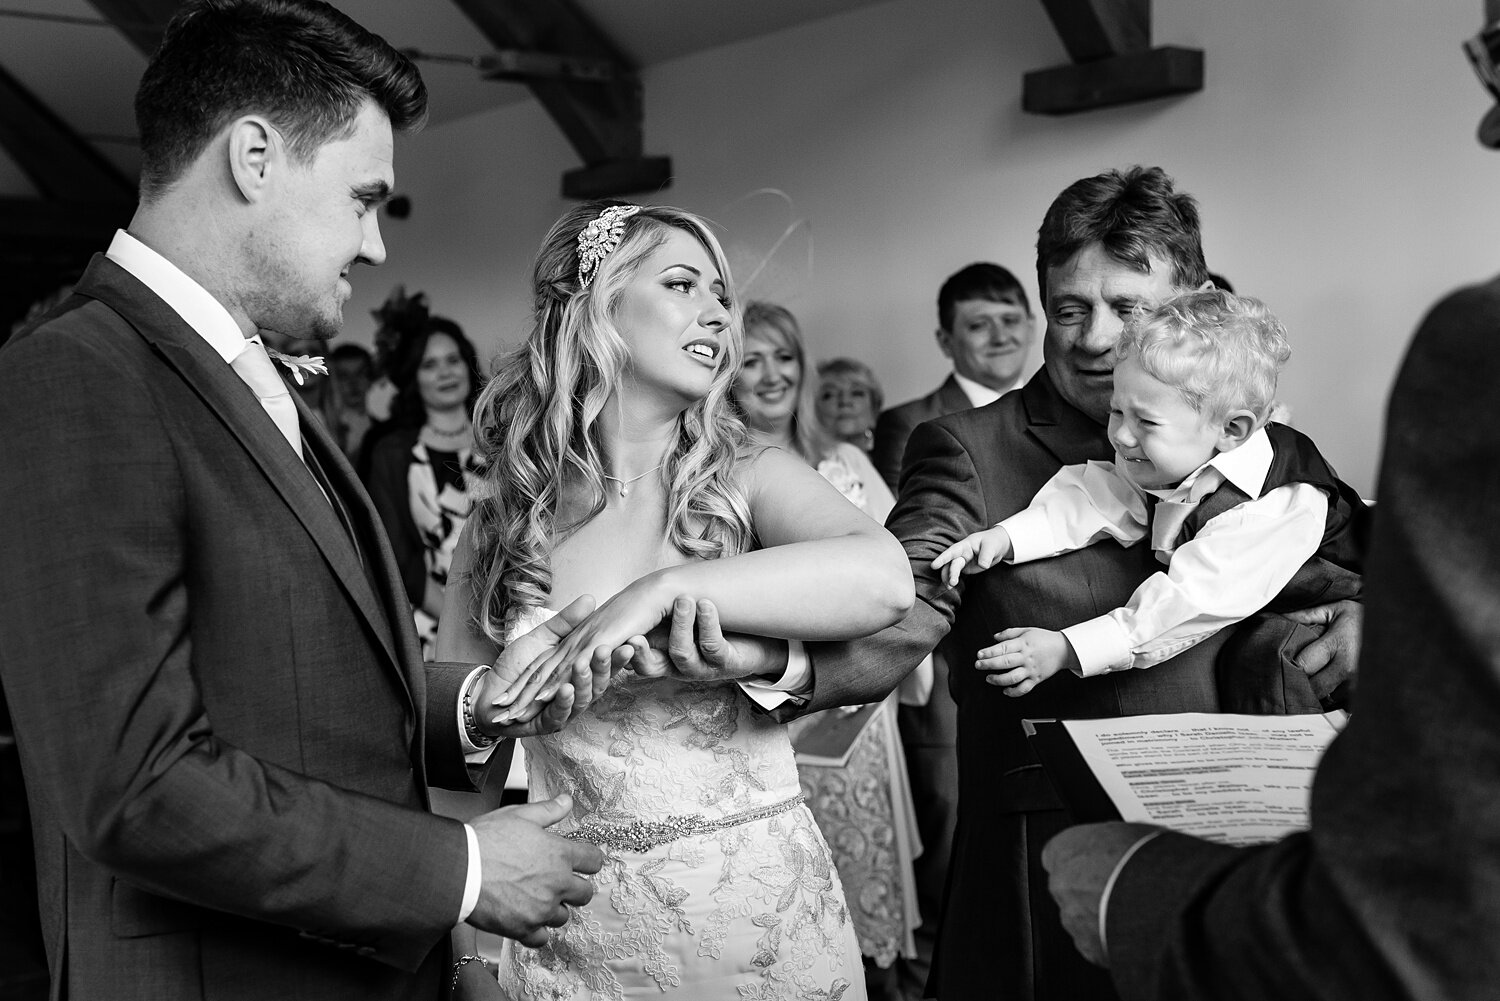 Wedding moments at Carreg Cennen Castle